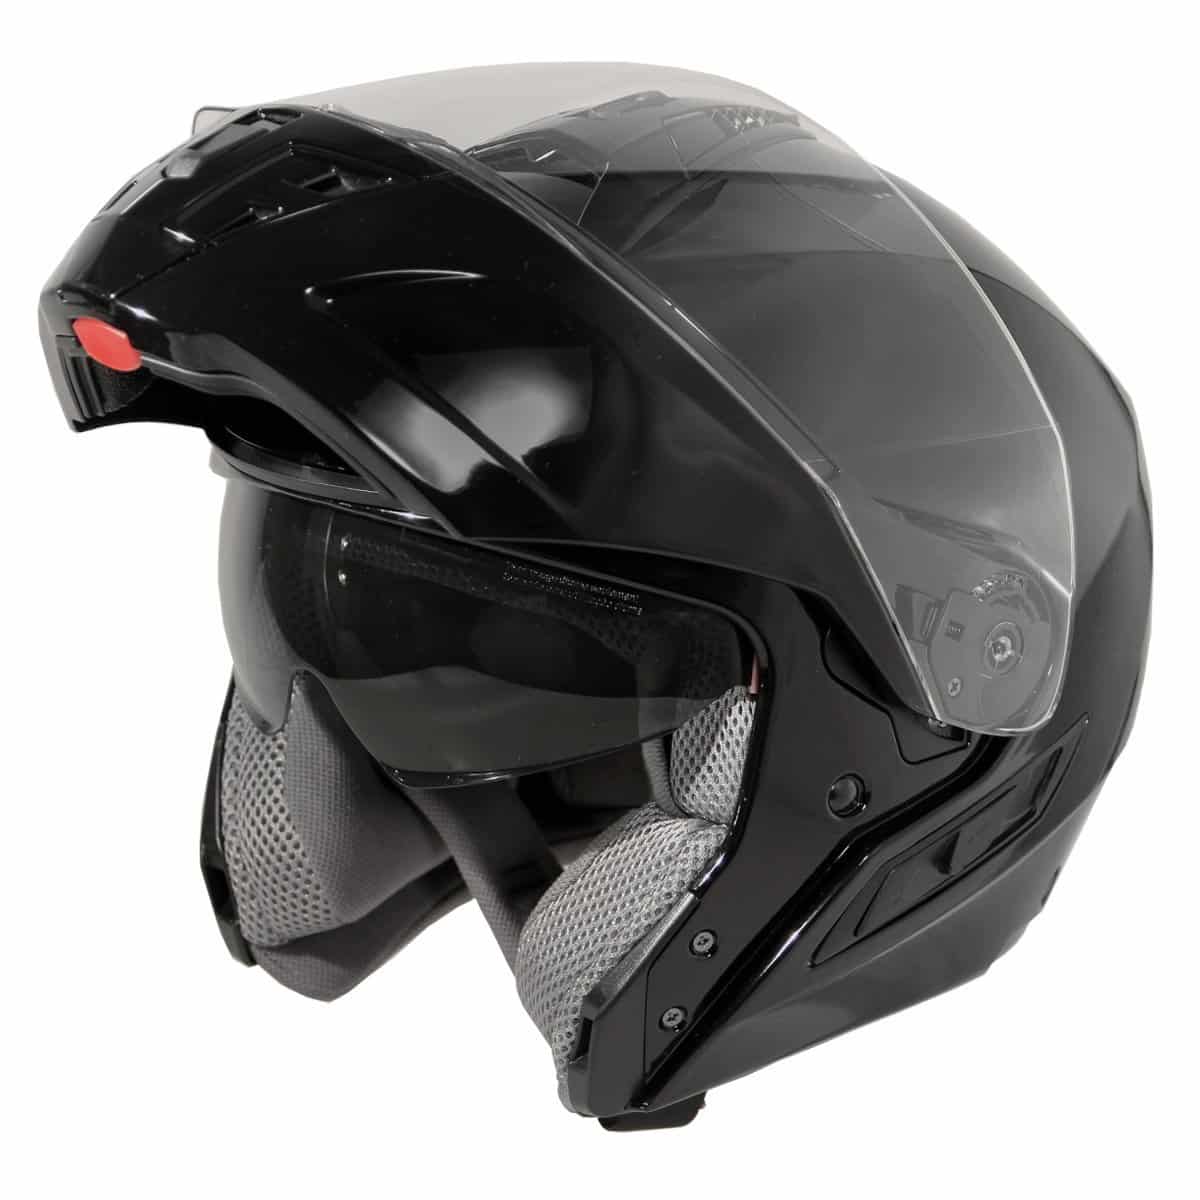 Top 10 Best Full Face Modular Helmets in 2022 - TopTenTheBest